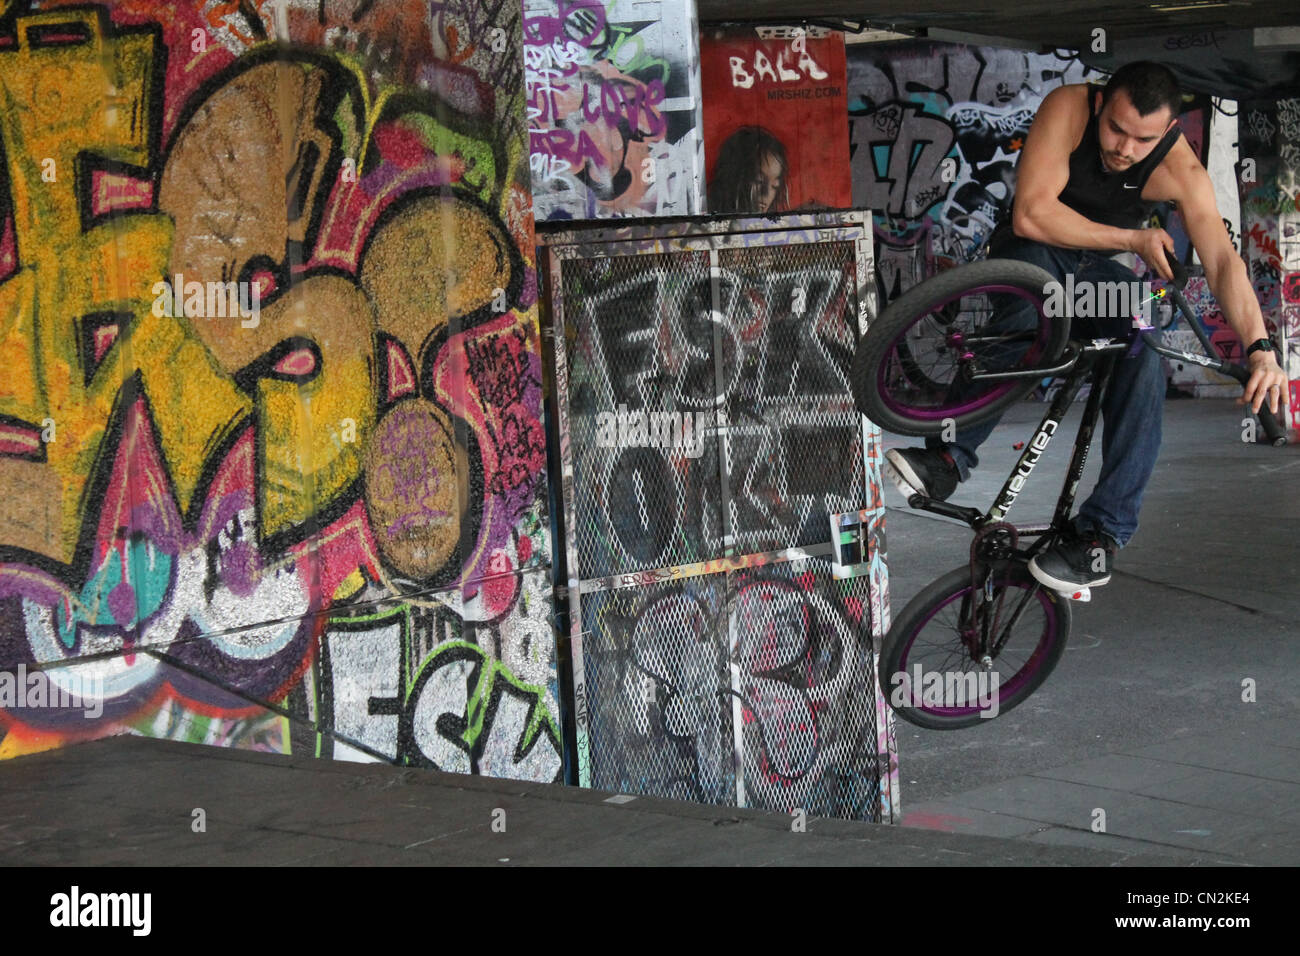 Rider BMX, bmx tricks bmx vélo, cascades, trucs et astuces Banque D'Images